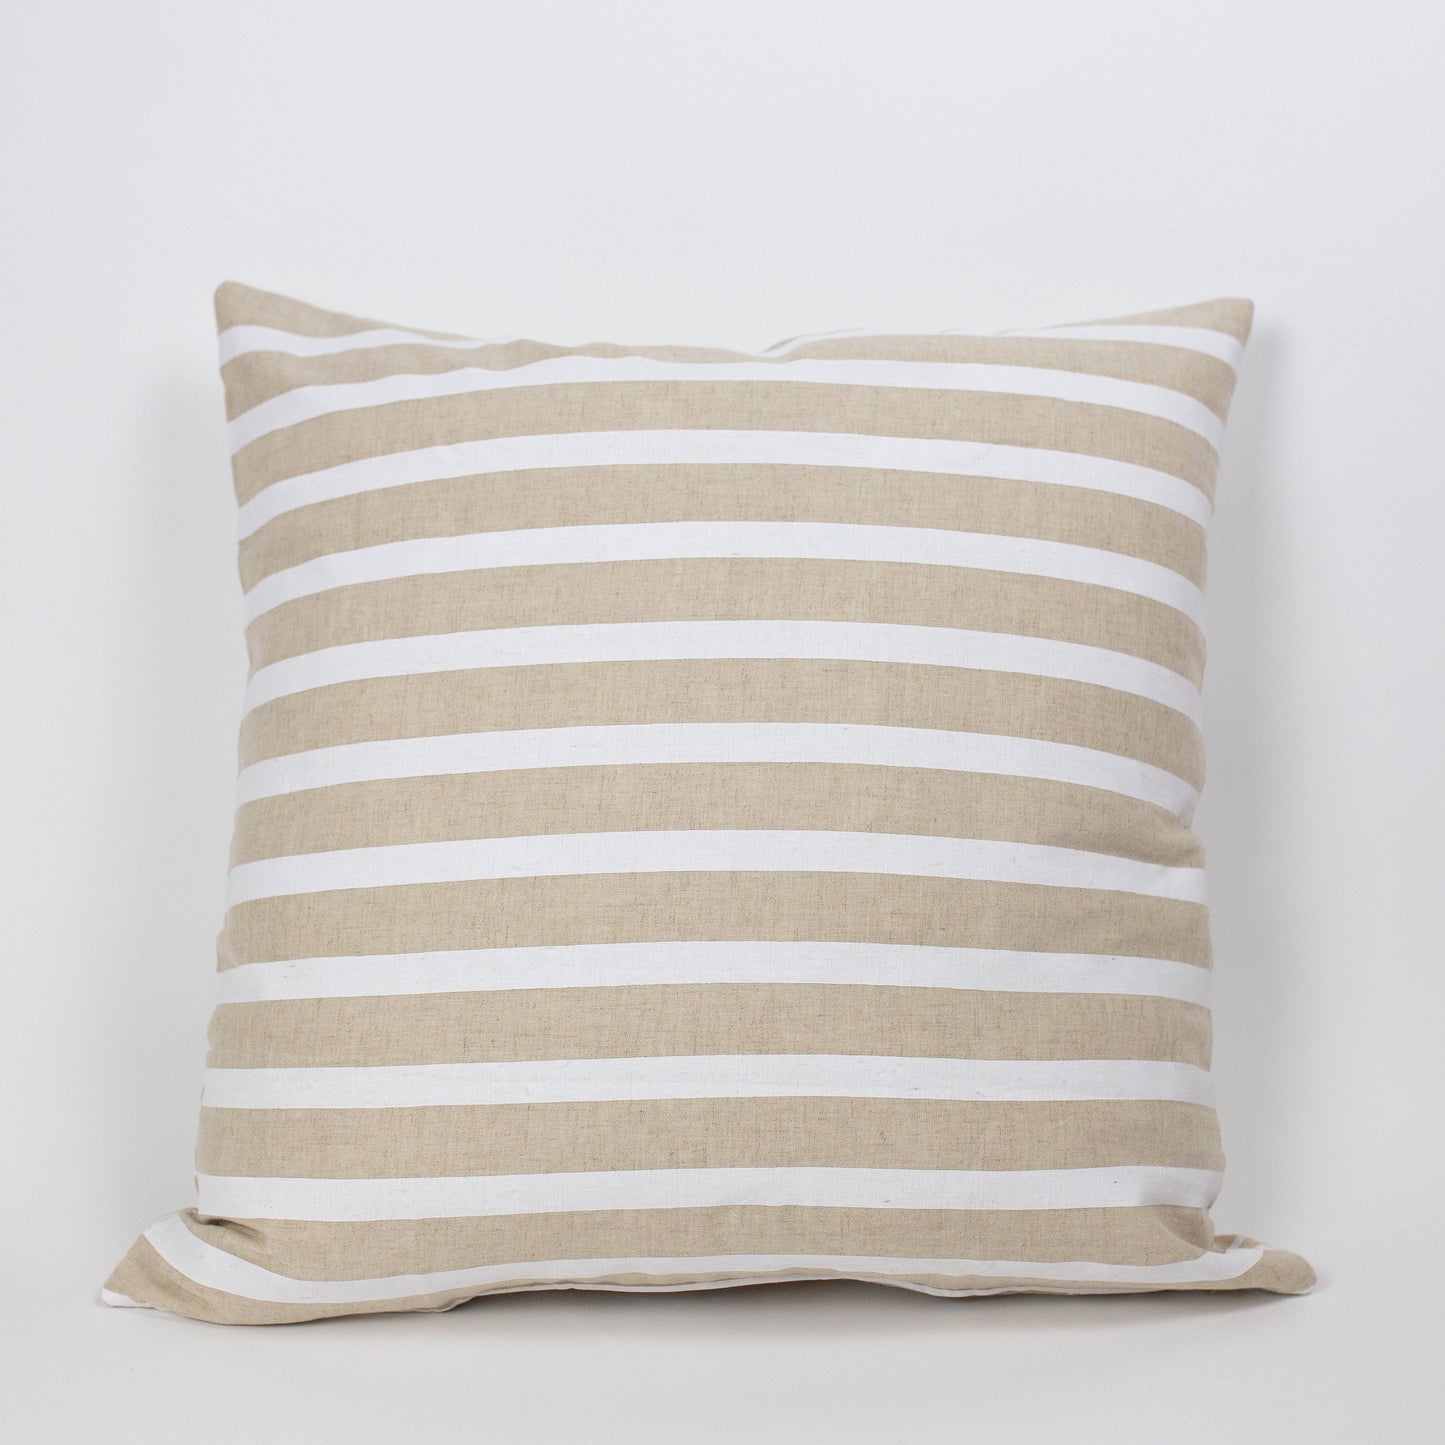 Banana Leaf/Chic Stripes Square Pillow Cover | Black or White design